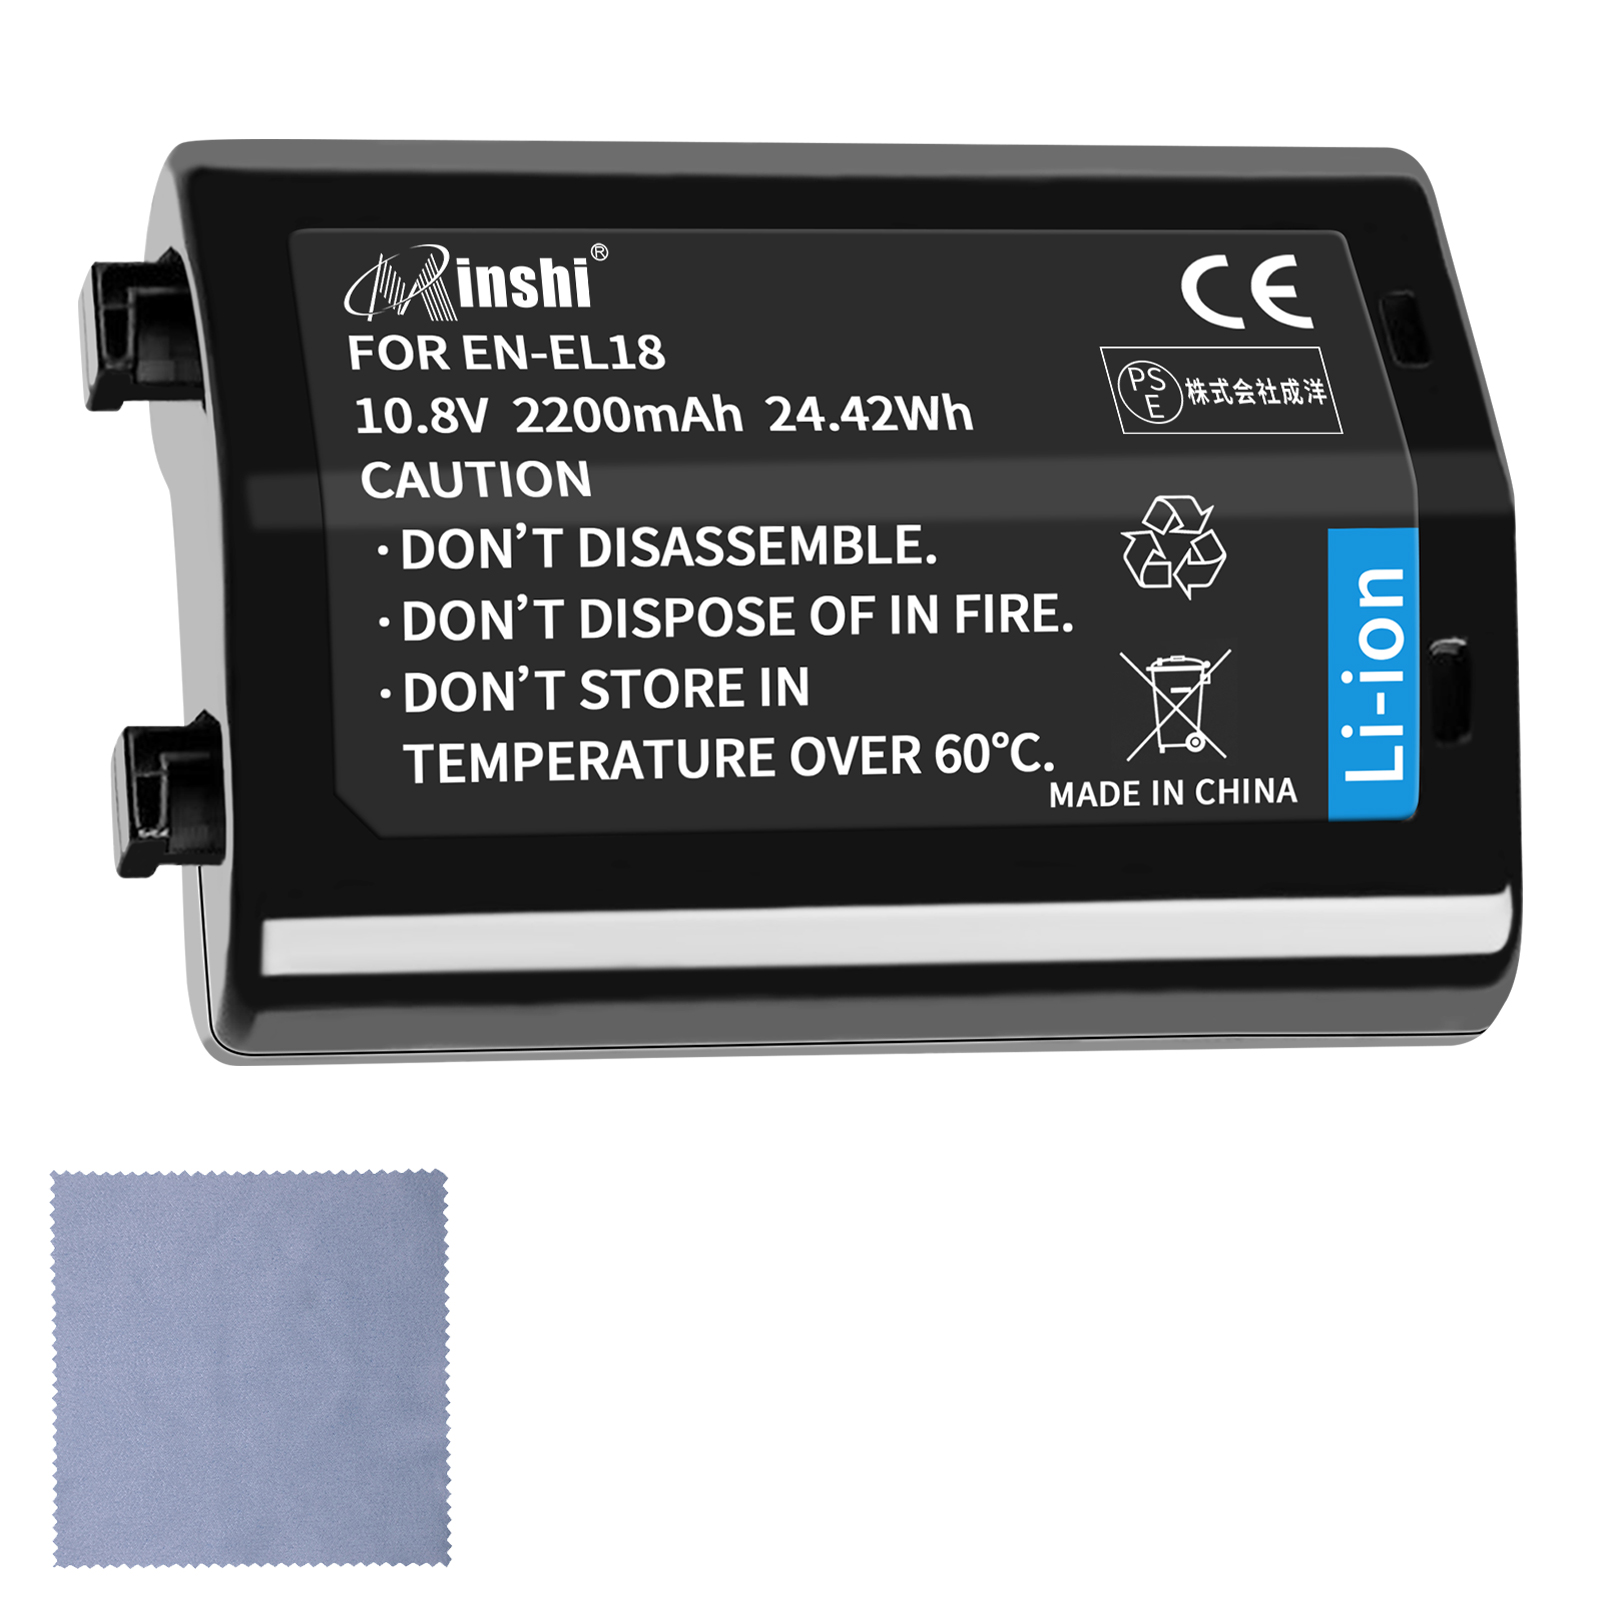 【清潔布ー付】minshi NIKON BL-5【2200mAh 10.8V】PSE認定済 高品質 EN-EL18 / EN-EL18a交換用バッテリー